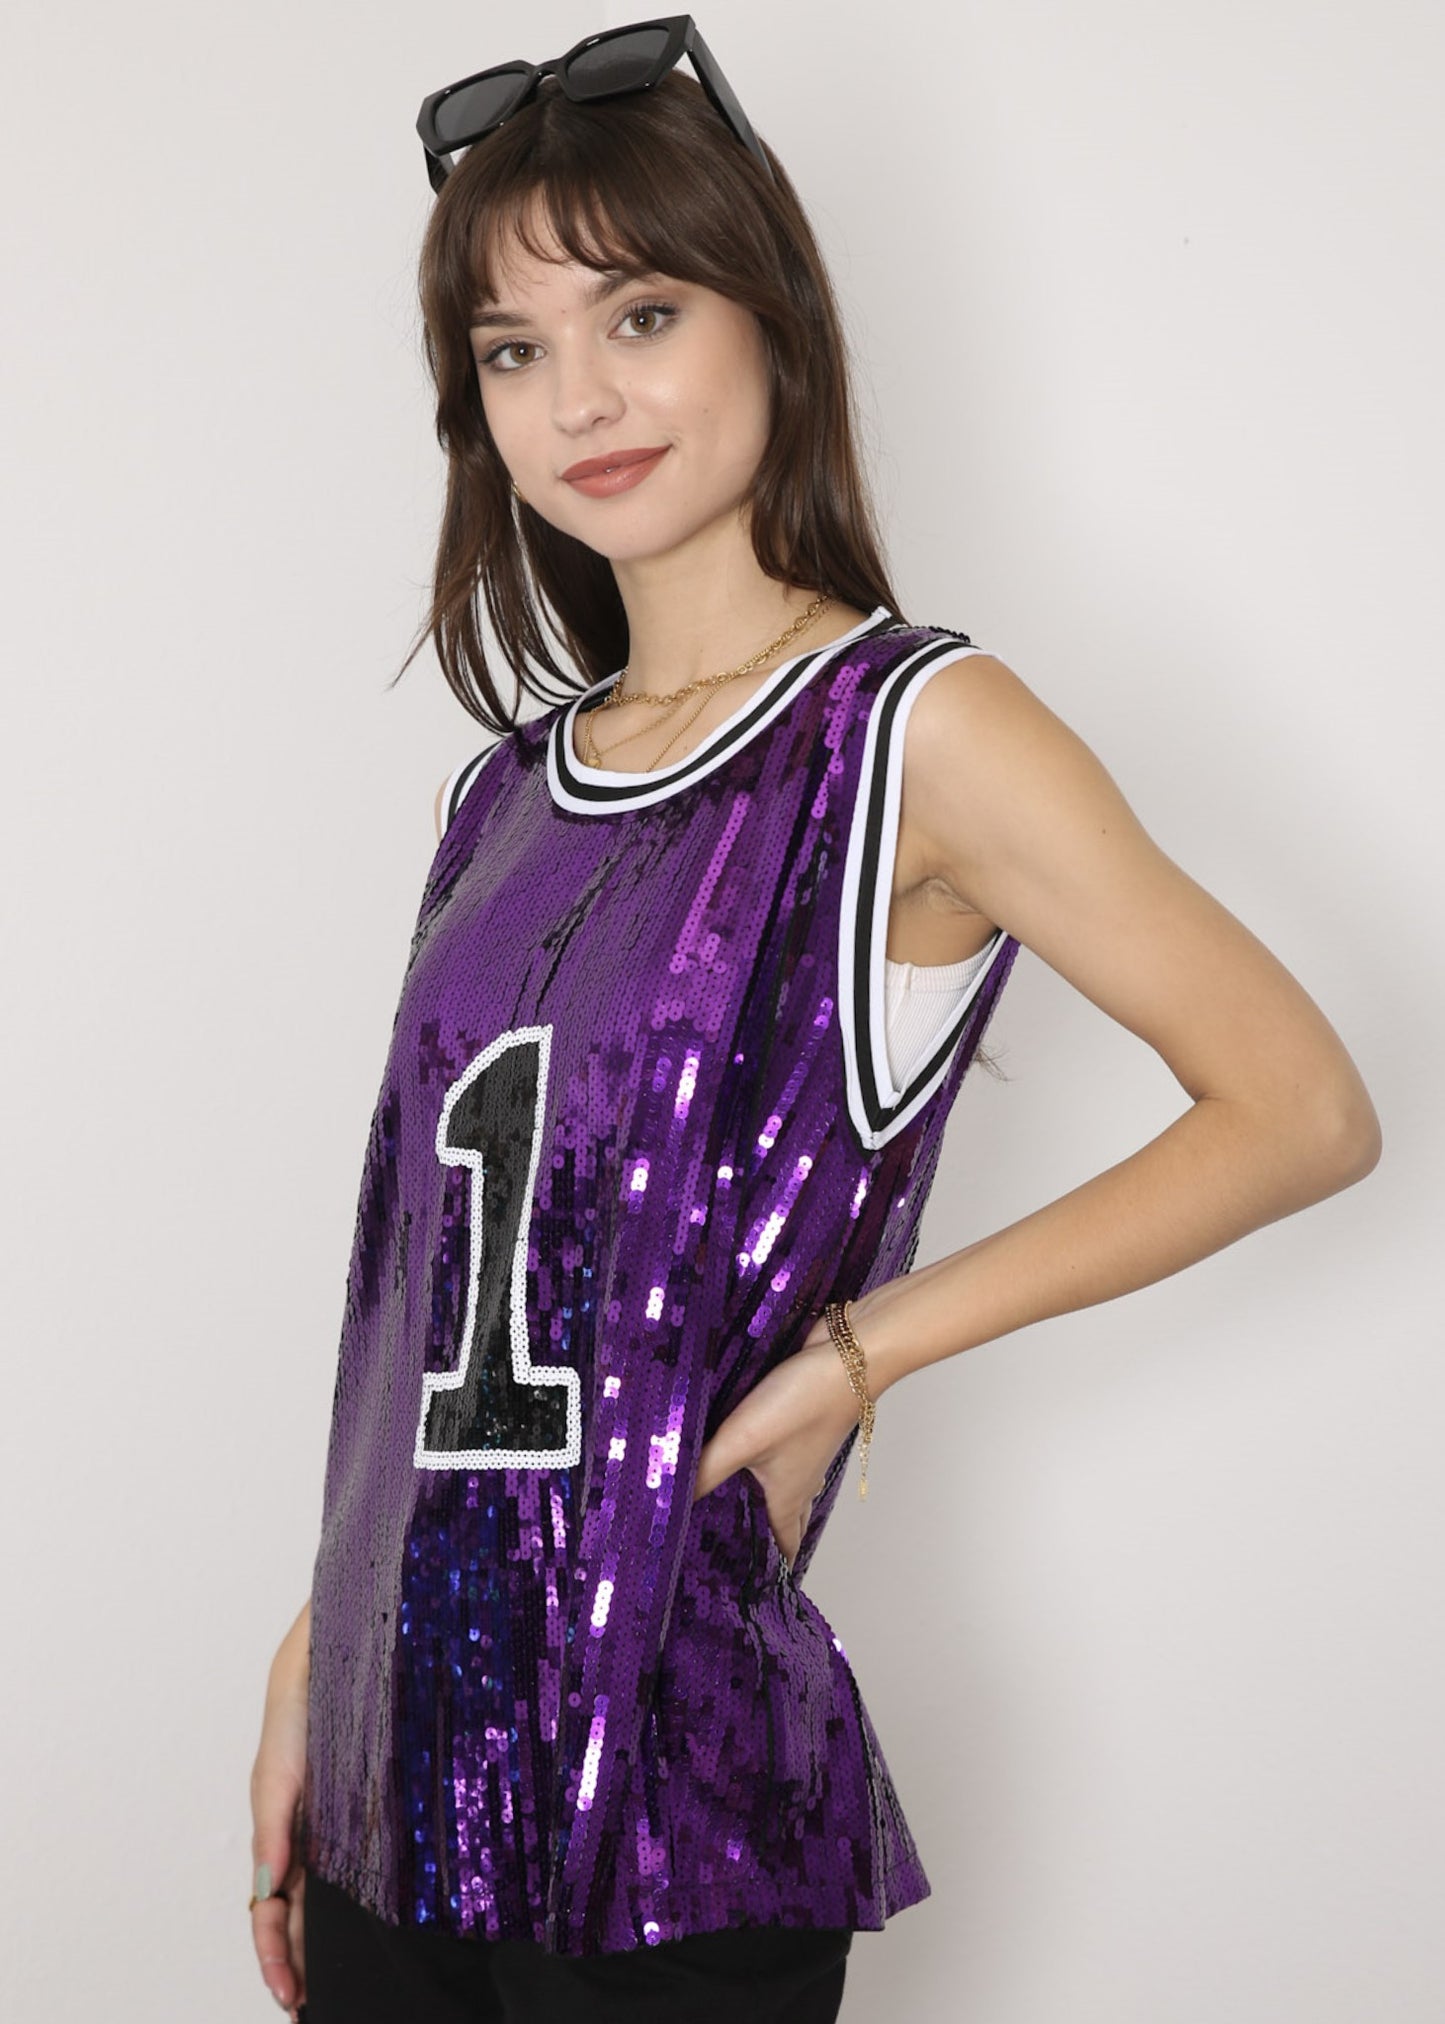 Sparkle Glitter Hip Hop Number 1 T-Shirt Top Blouse Tunic Sequins Basketball Tank Vests